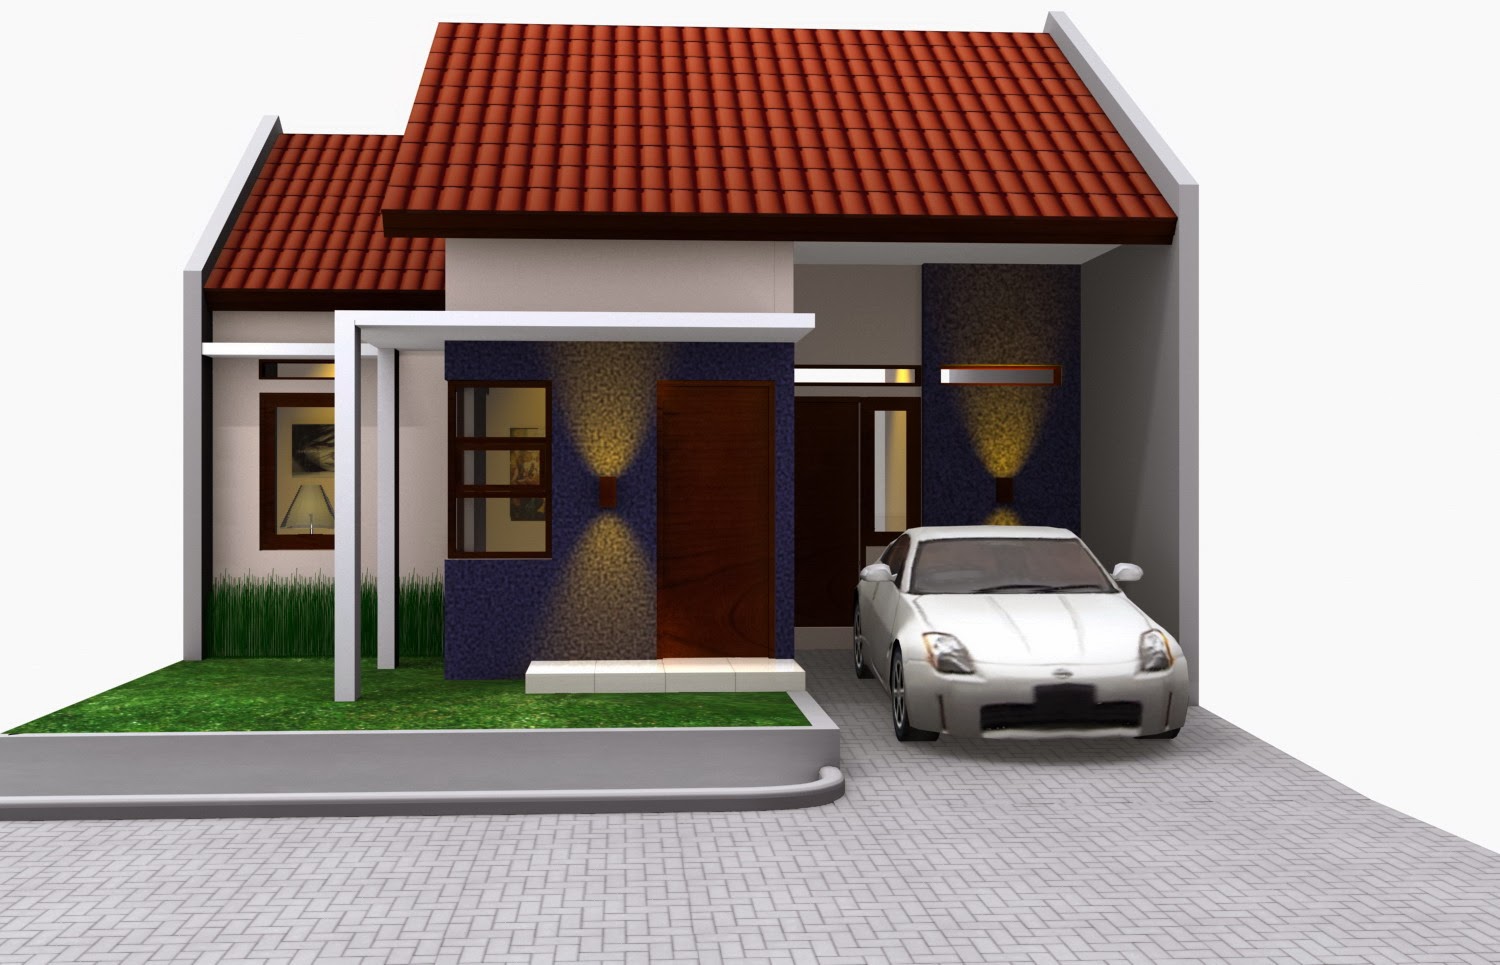  Model  Rumah  Minimalis  Type 45 Terbaru  Kumpulan Gambar 